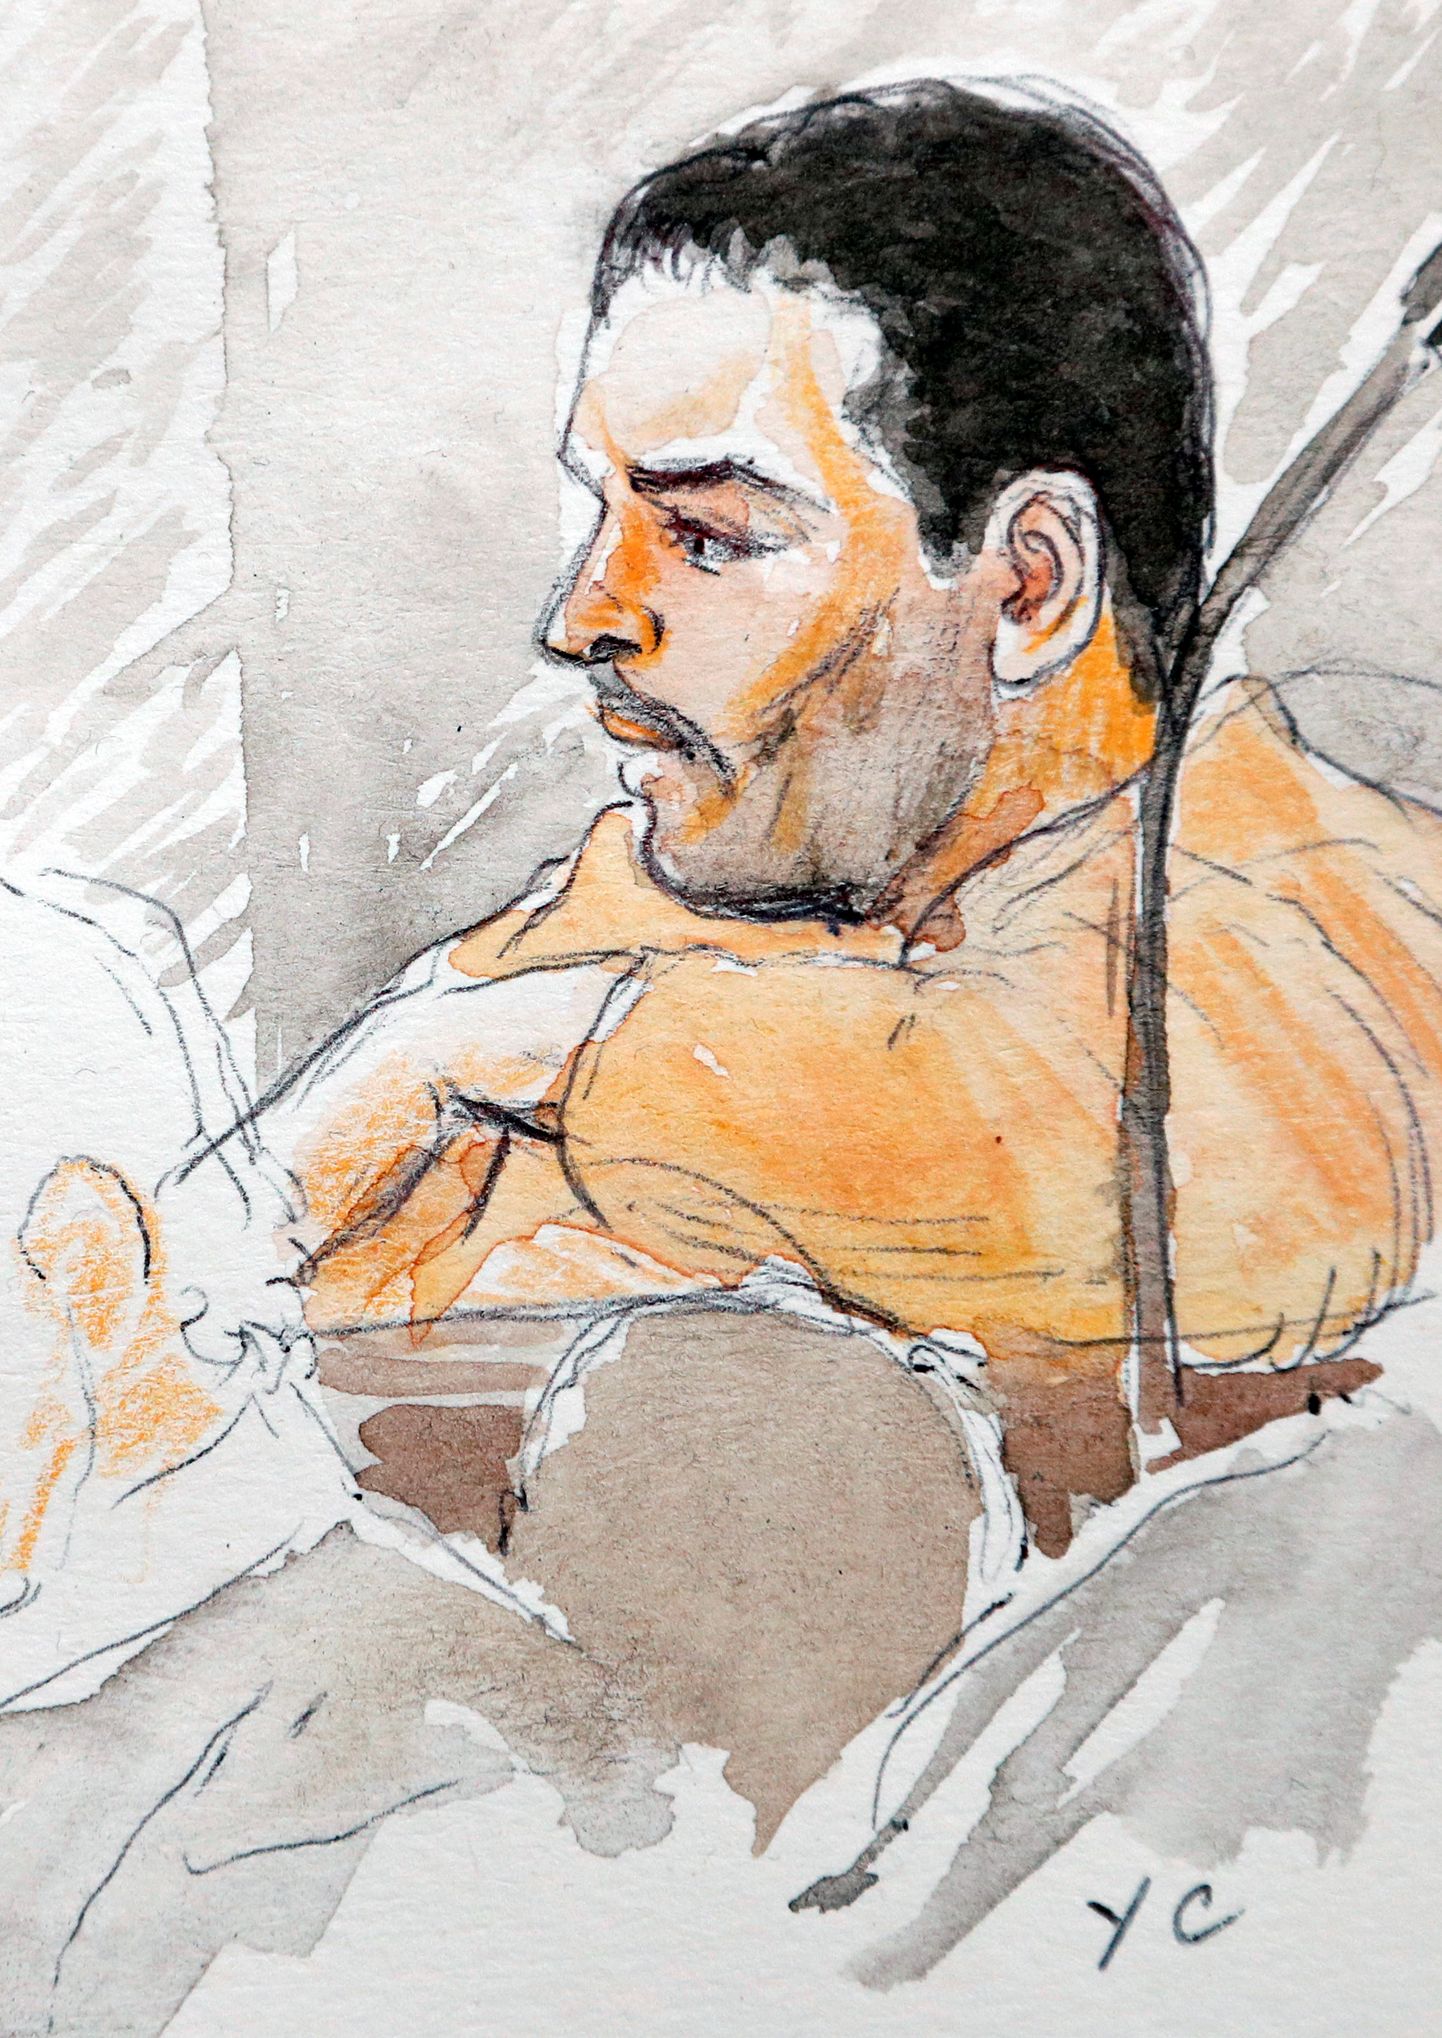 Belgias algas kohtuprotsess džihadist Mehdi Nemmouche'i üle.